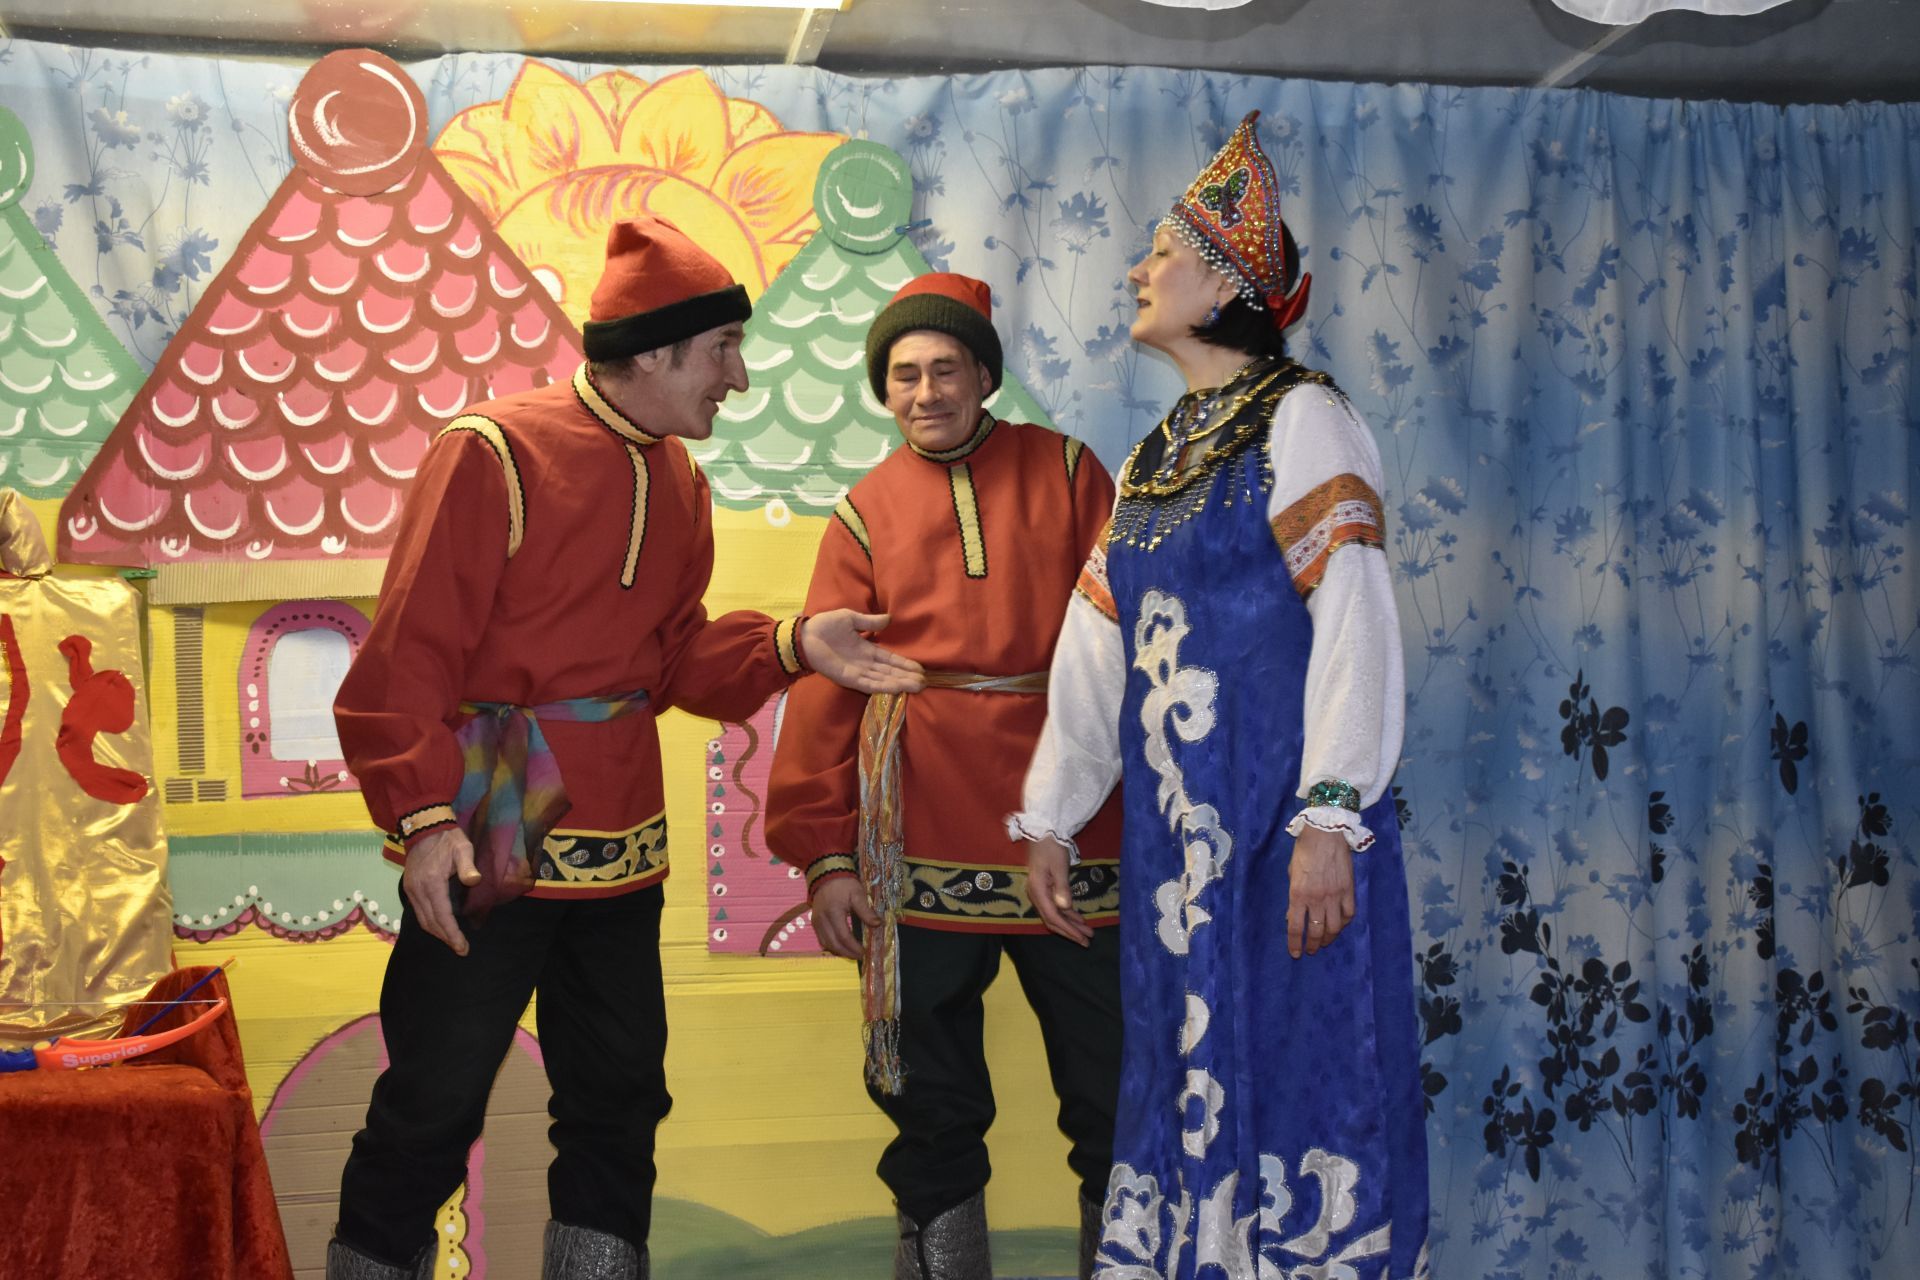 “Театр сәхнәсе” дип исемләнгән  район фестивале кызганнан-кыза бара: Кашка мәдәният йортының “Гармония” театр төркеме